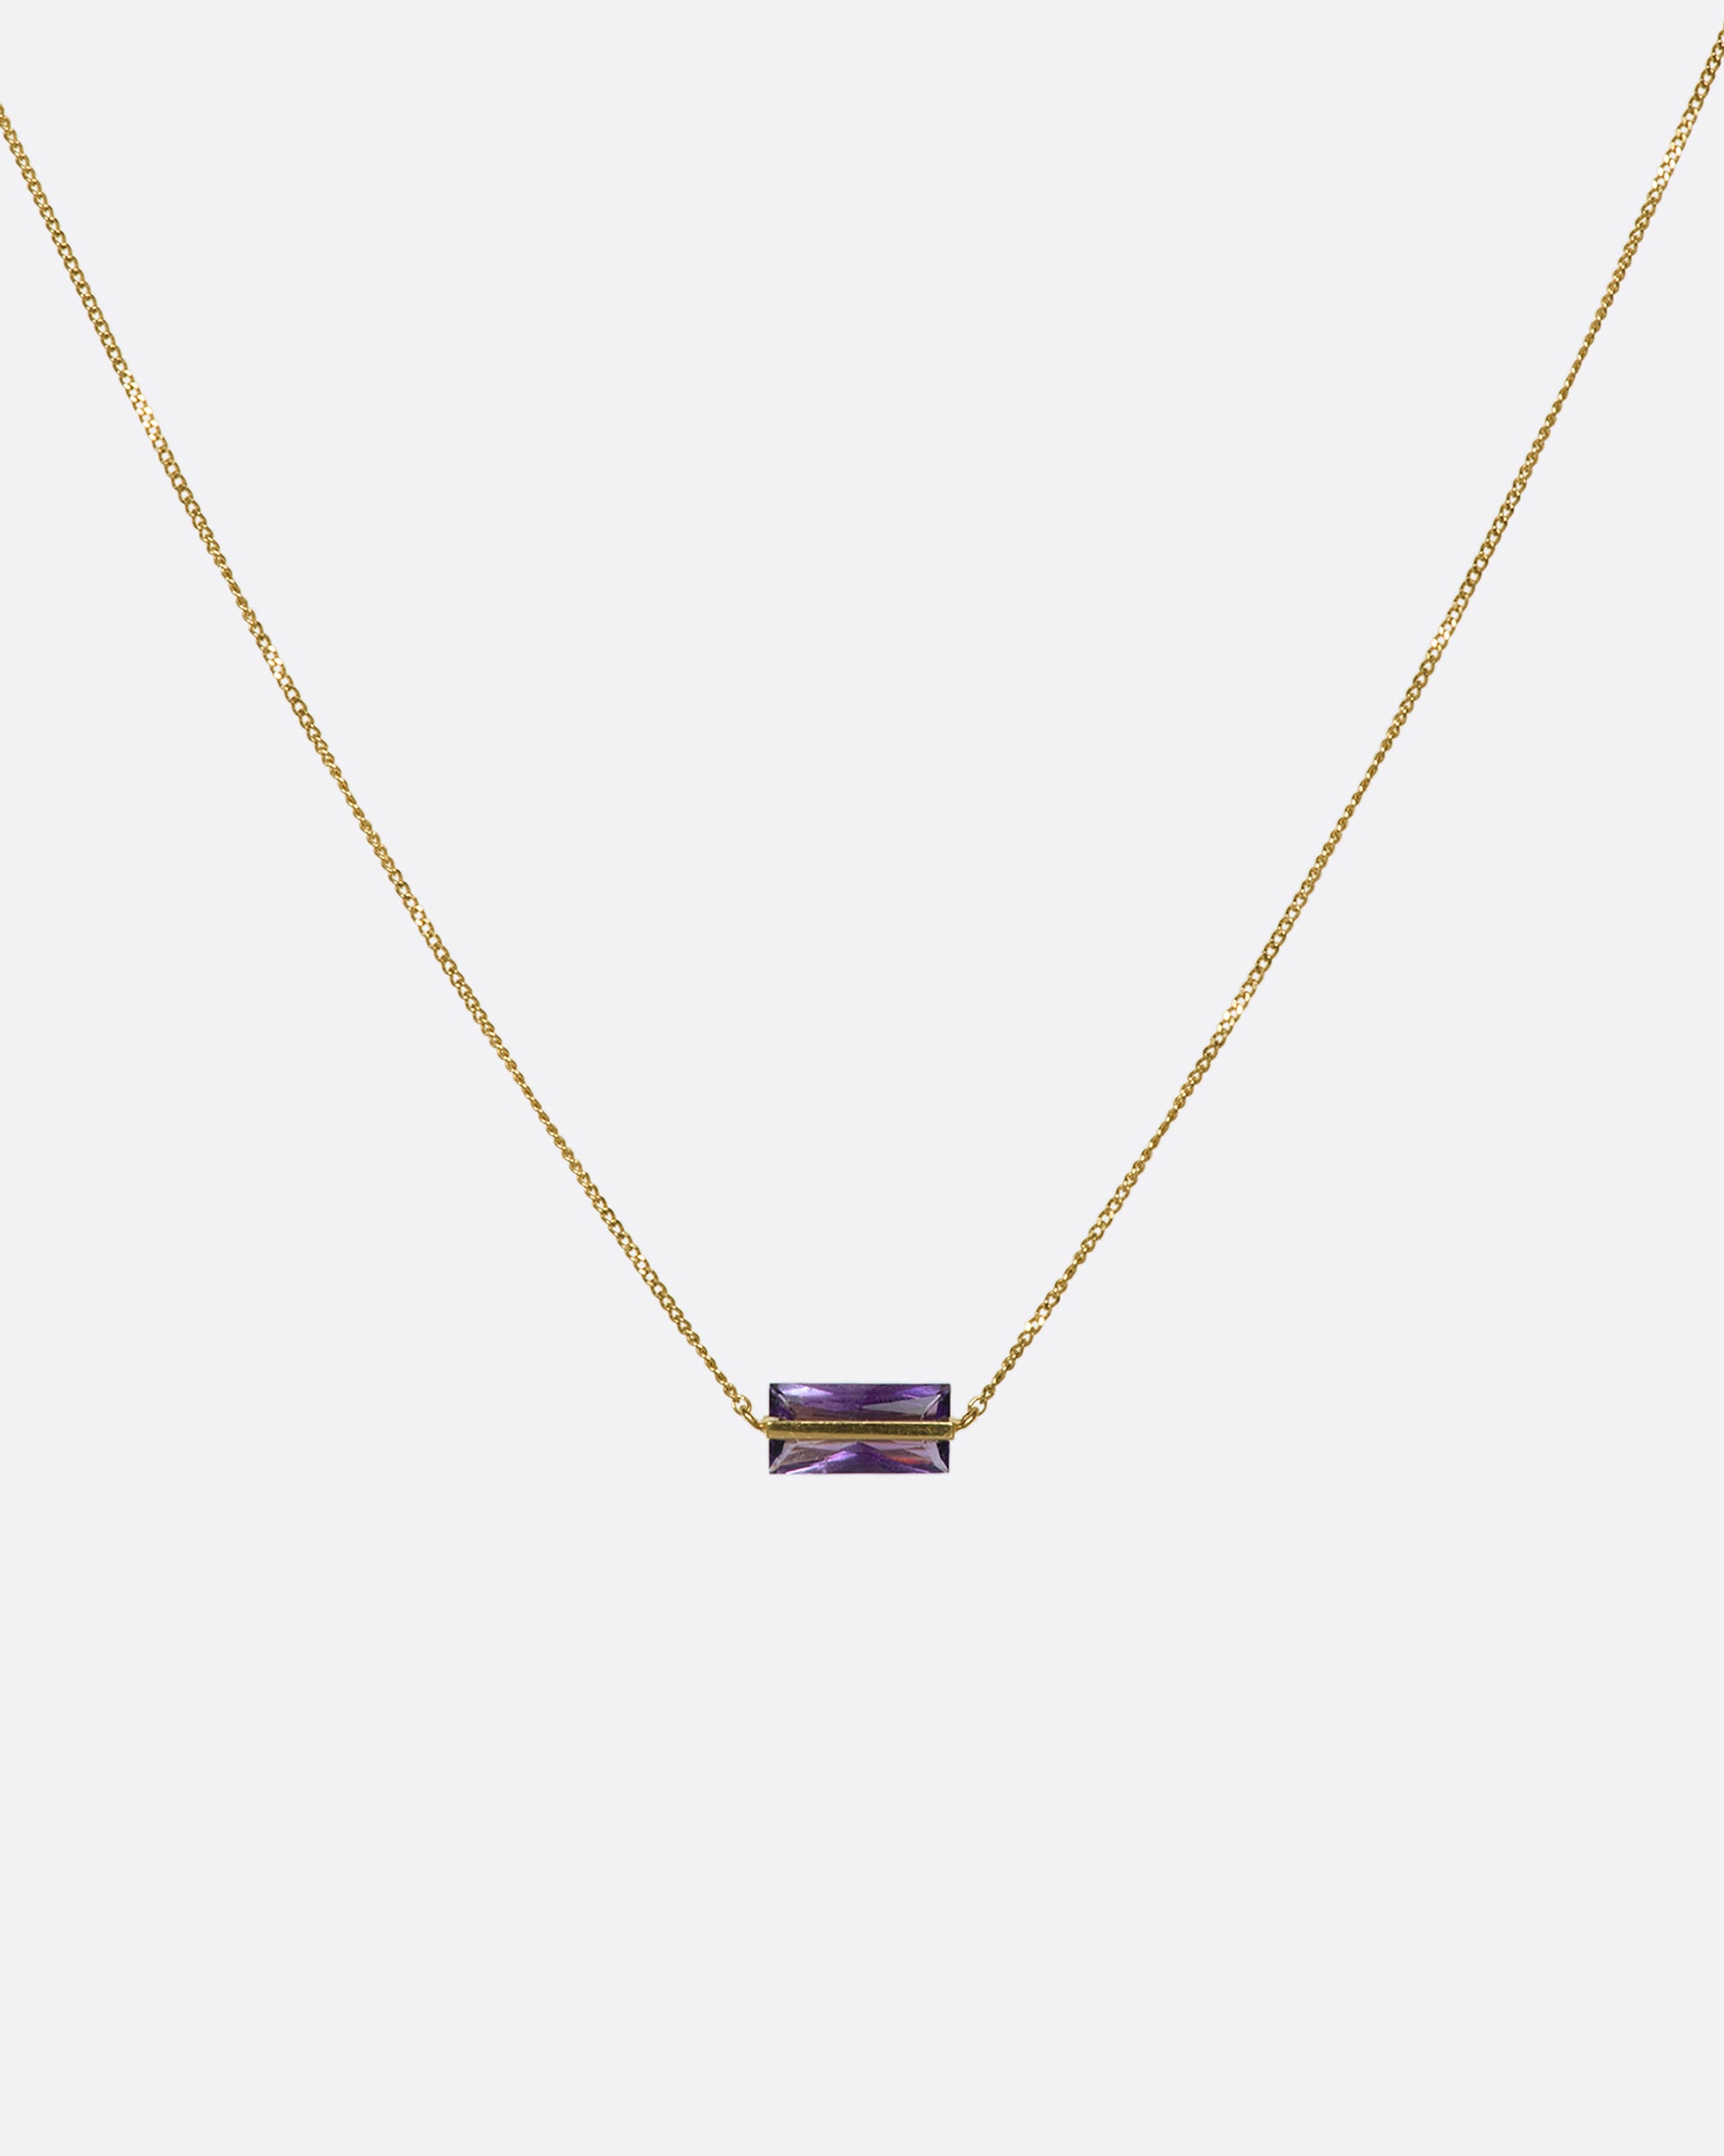 A rectangular amethyst threaded along a fine 10k gold chain